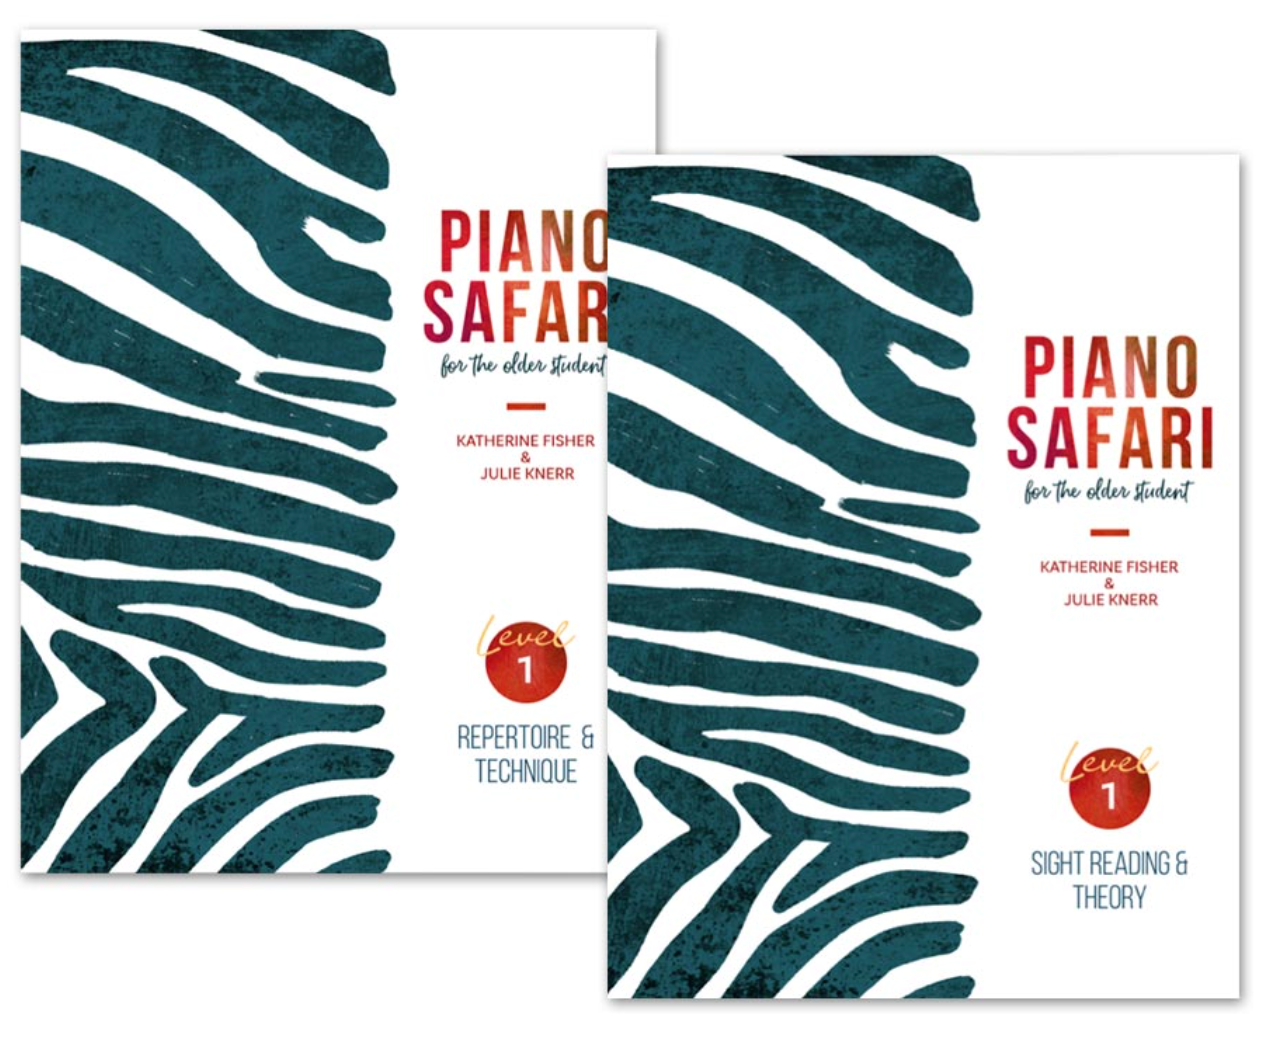 Piano Safari Older Student 1 Pack - Fisher Katherine; Hague Julie Knerr Piano Safari PNSF1053